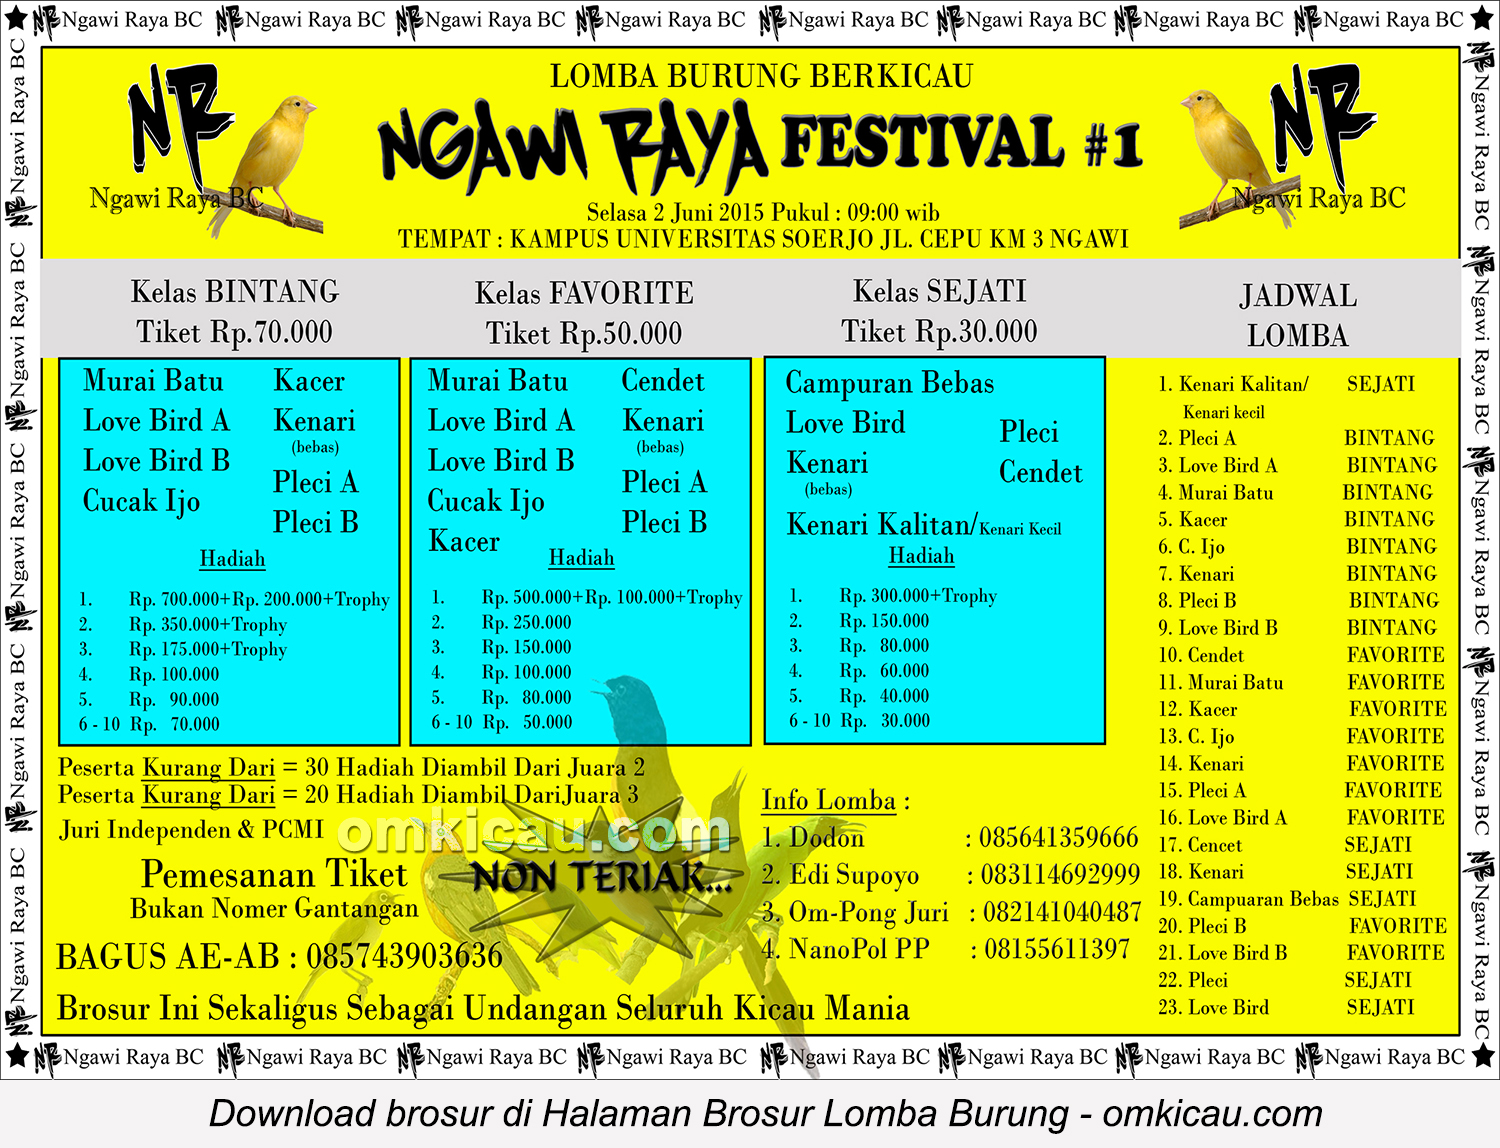 Brosur Lomba Burung Berkicau Ngawi Raya Festival #1, Ngawi, 2 Juni 2015